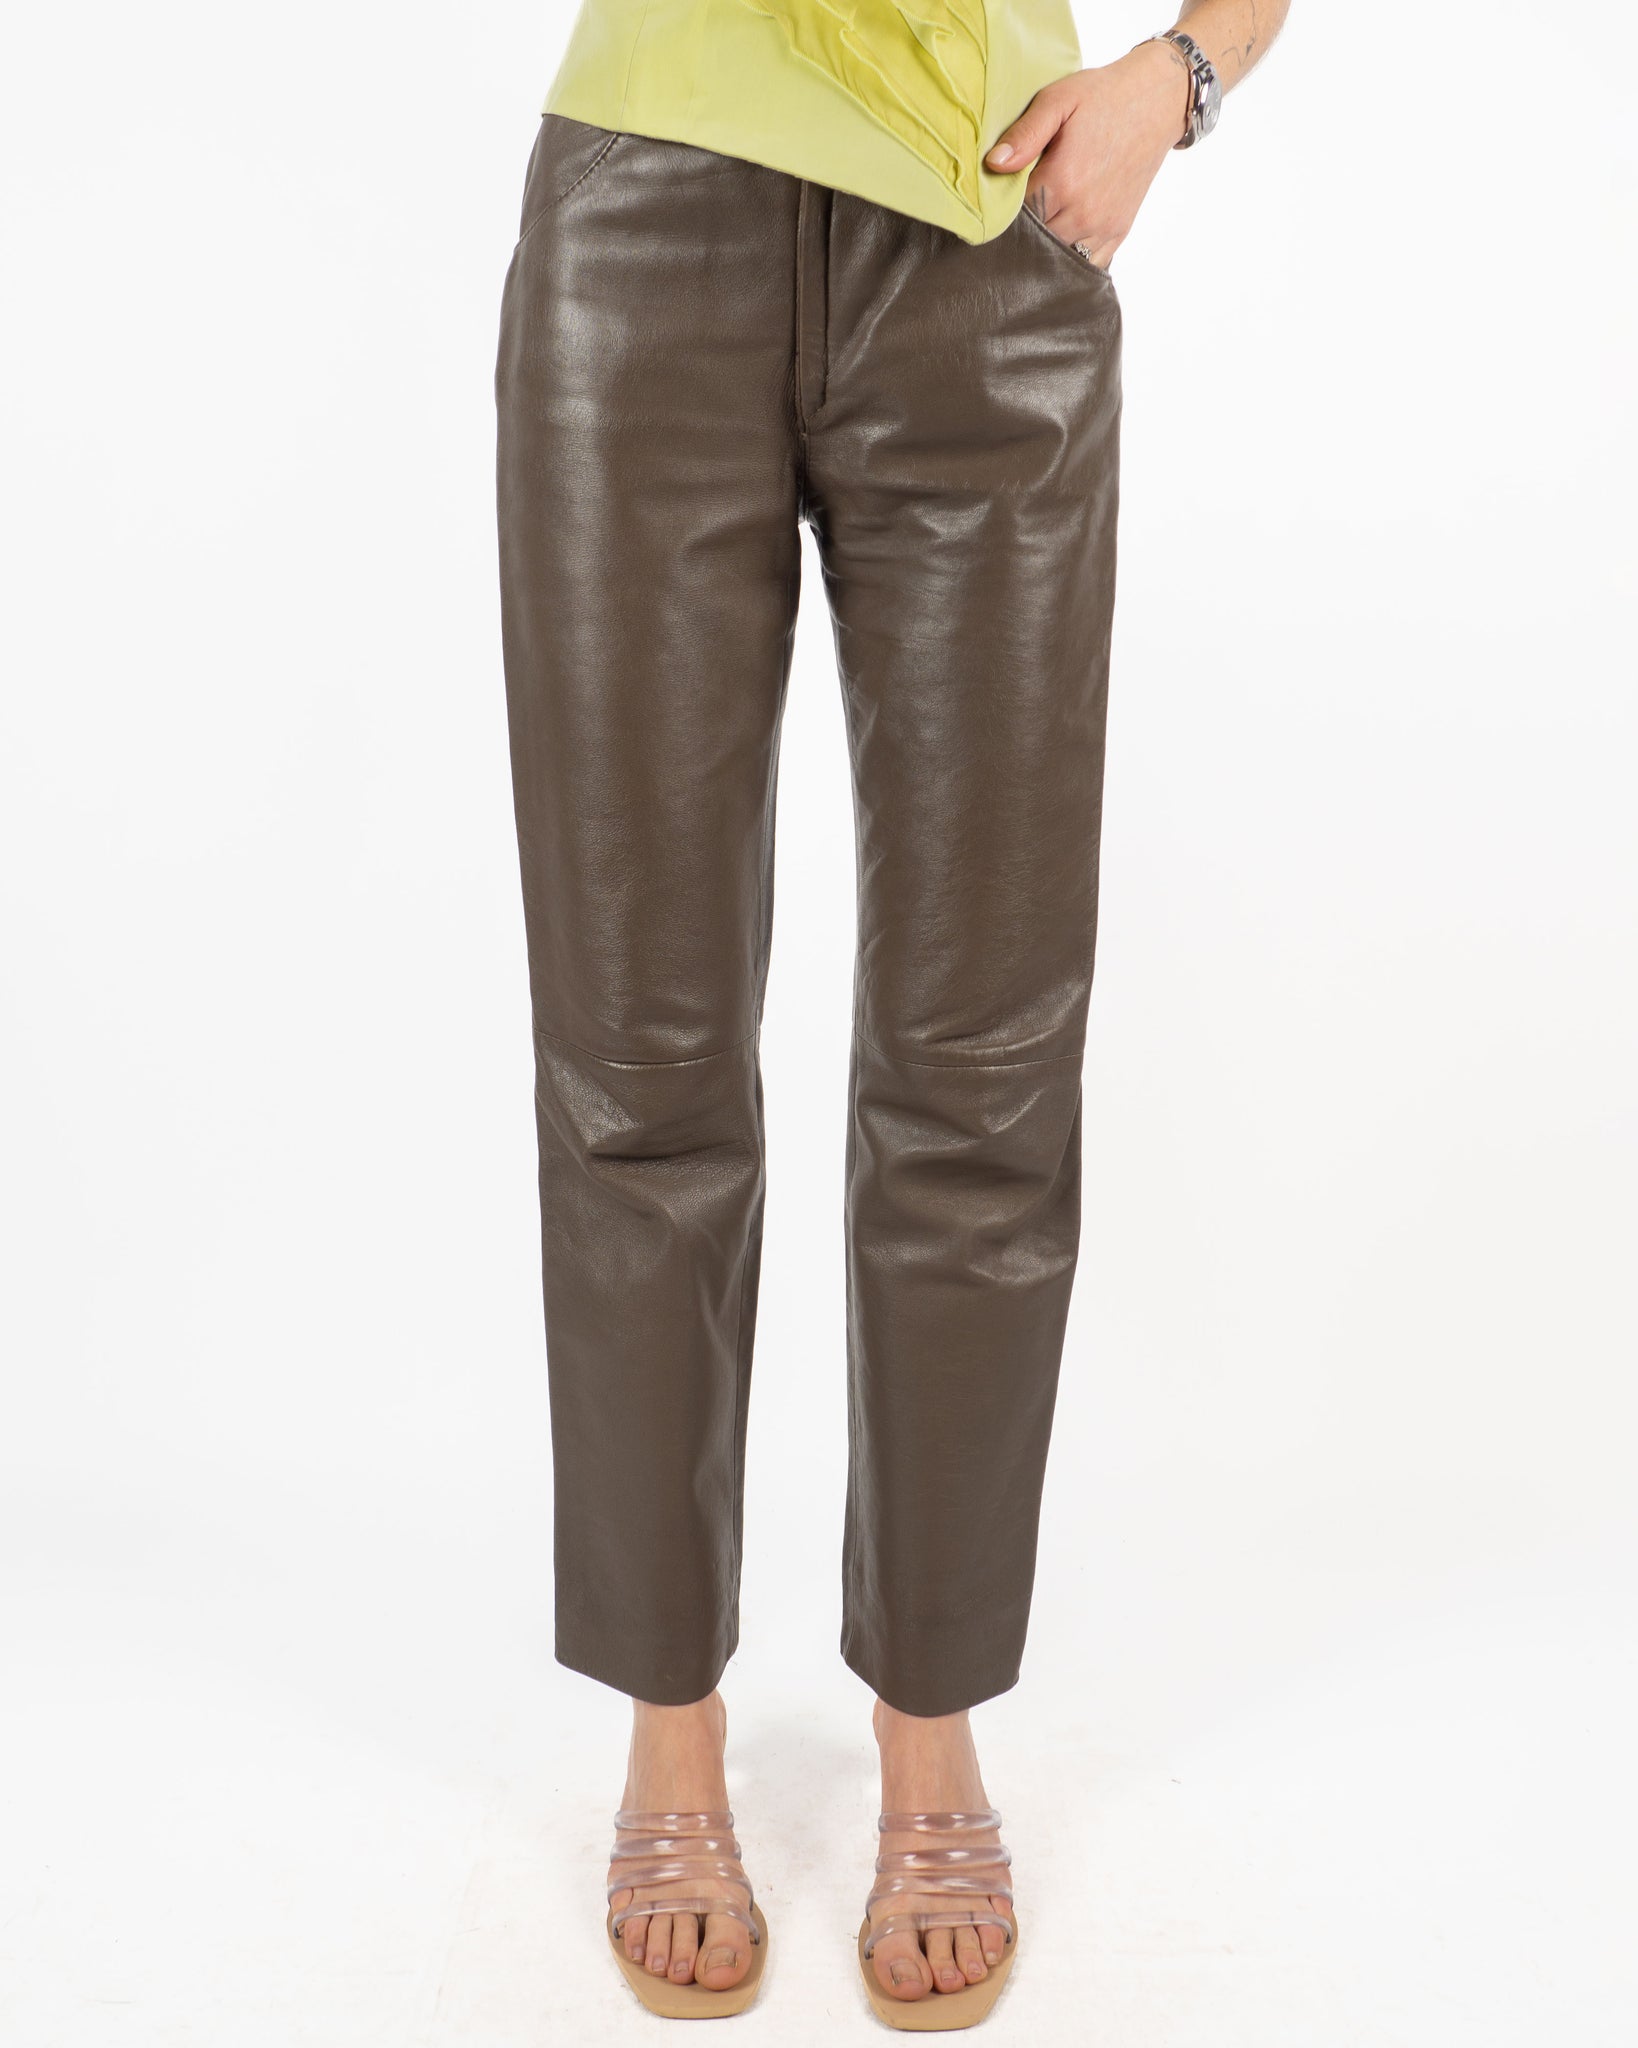 Khaki Leather Pants